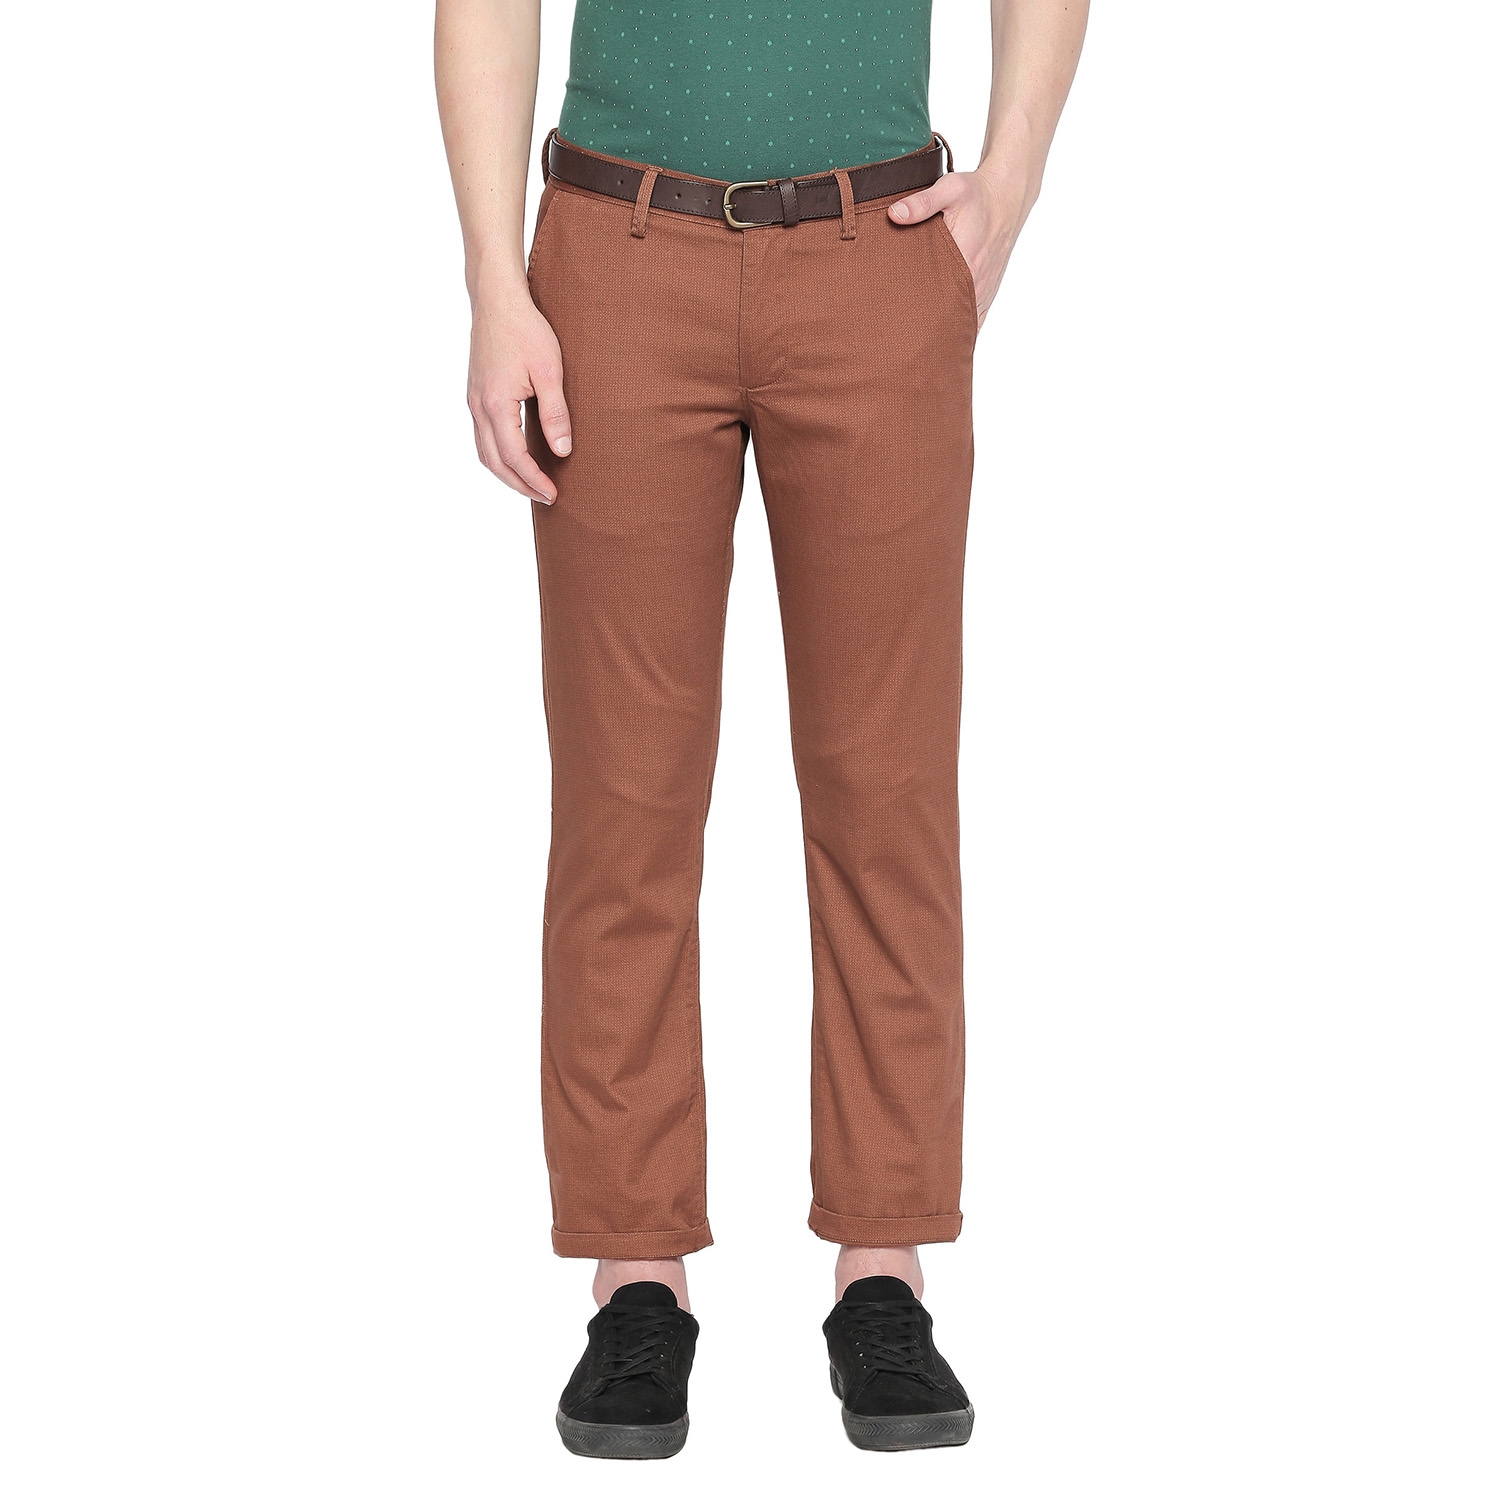 Basics | Basics Slim Fit Caramel Cafe Printed Stretch Trouser with Belt